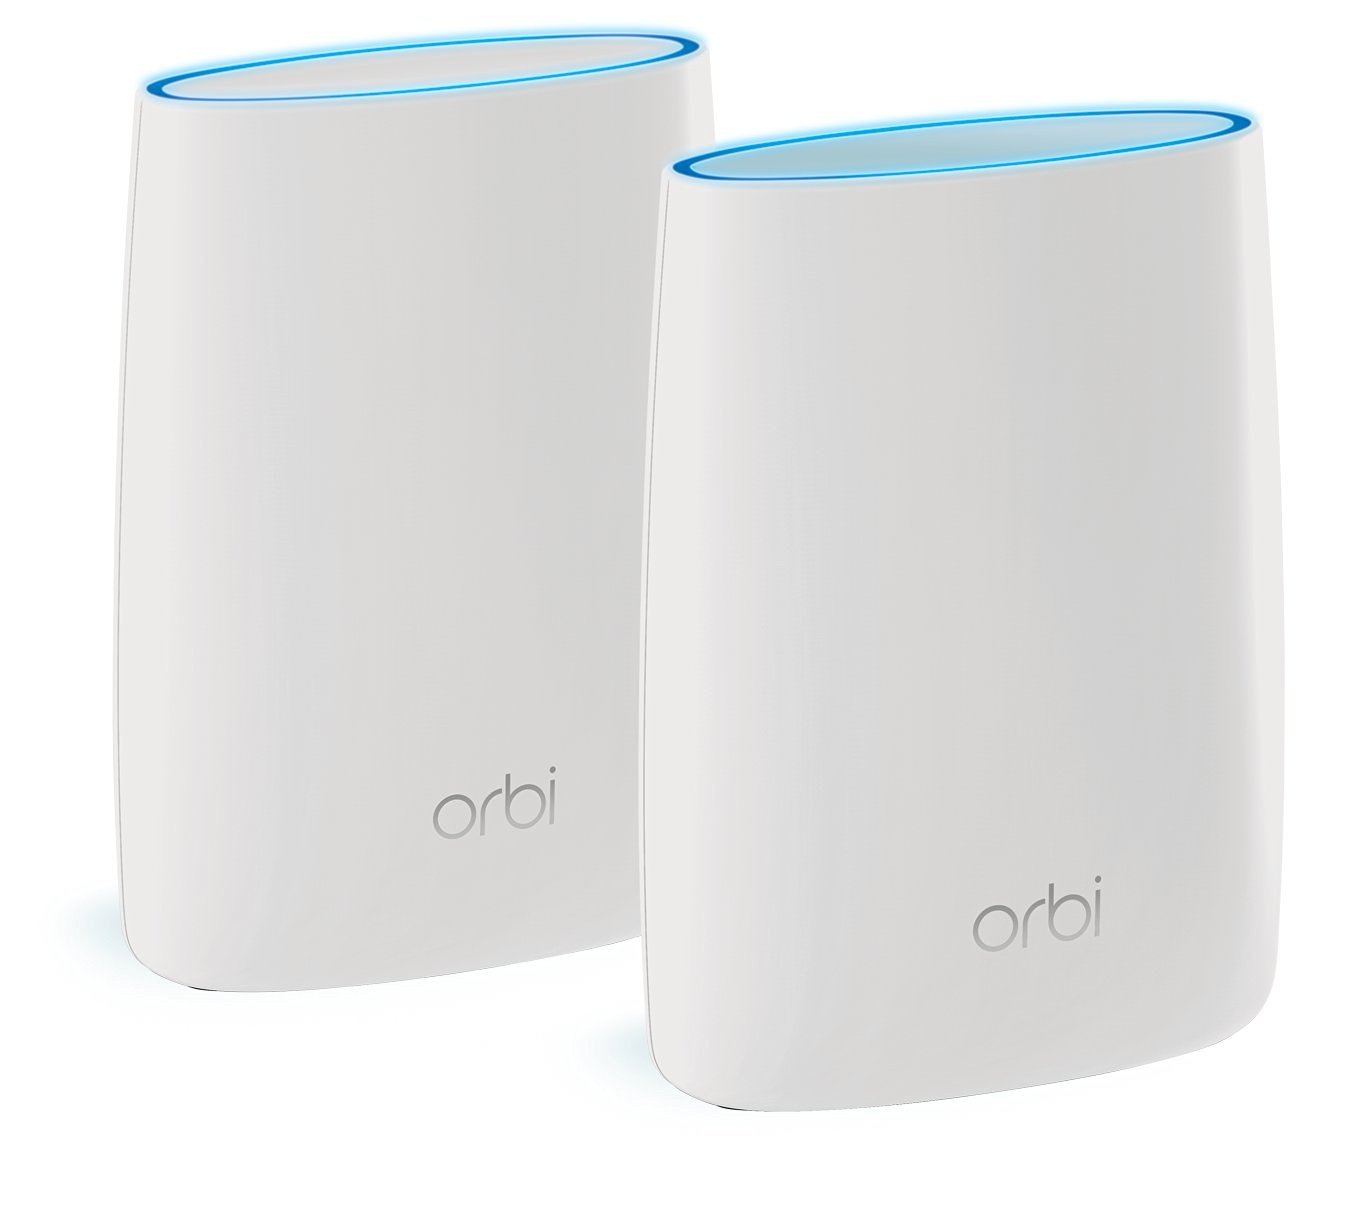 Orbi wifi system de Netgear, amplificador wifi AC3000 hasta 400 metros cuadrados